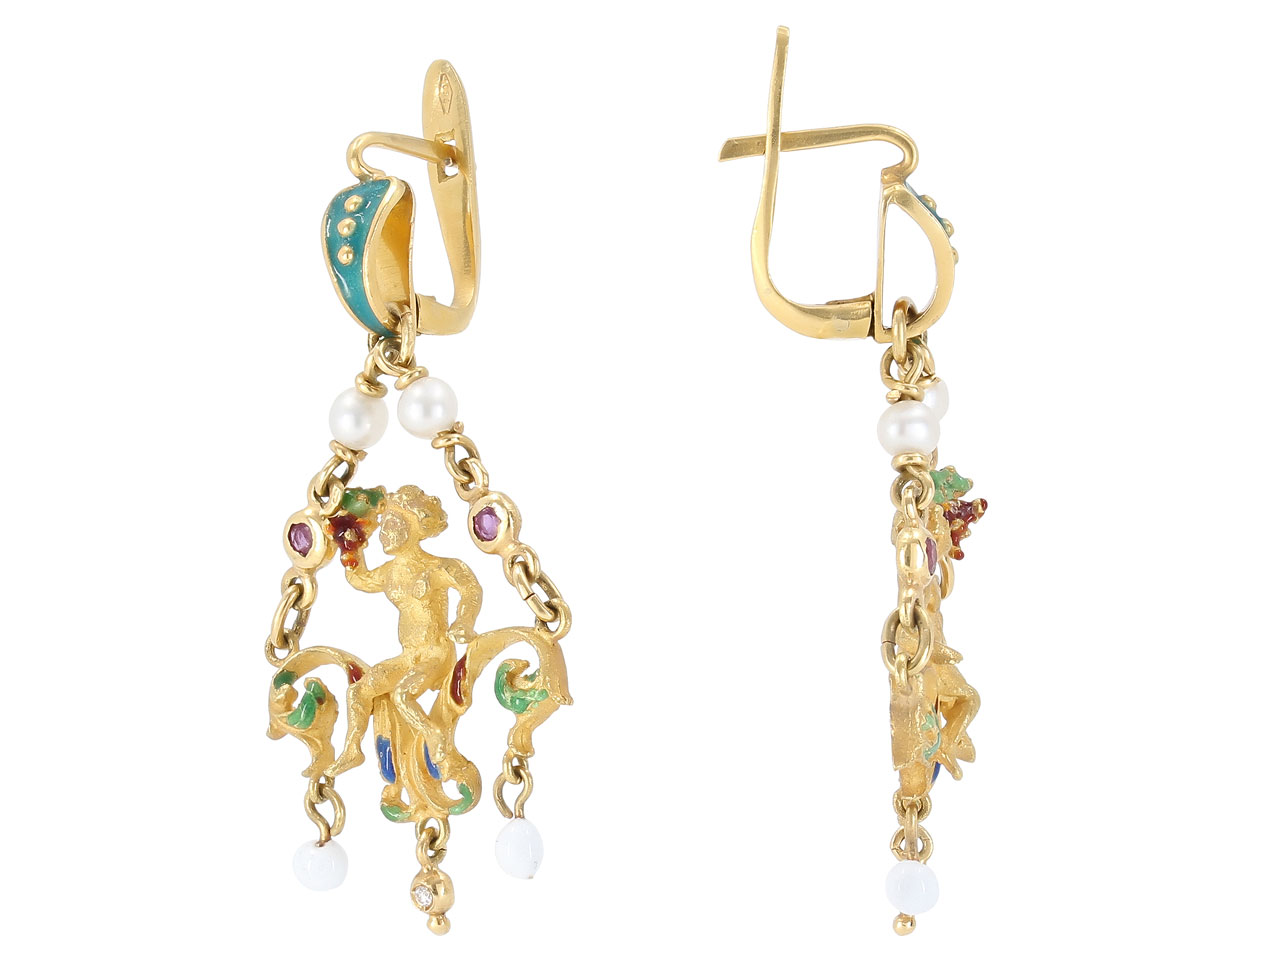 Antique-Style Bacchus Enamel and Diamond Earrings in 18K Gold